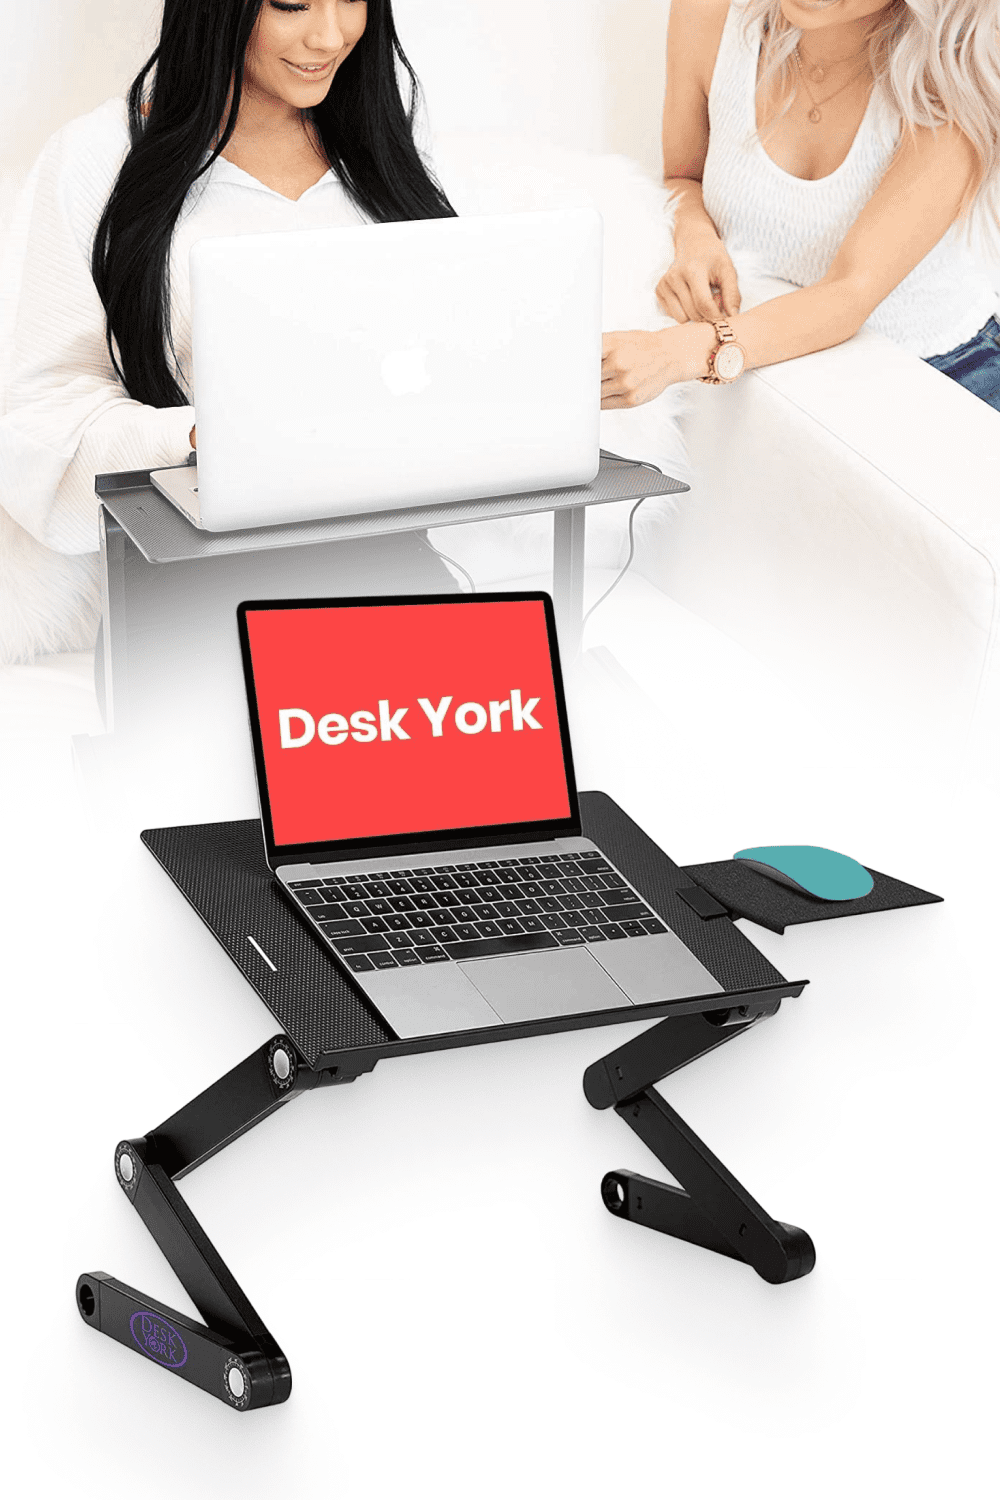 Desk York Portable Laptop Table.